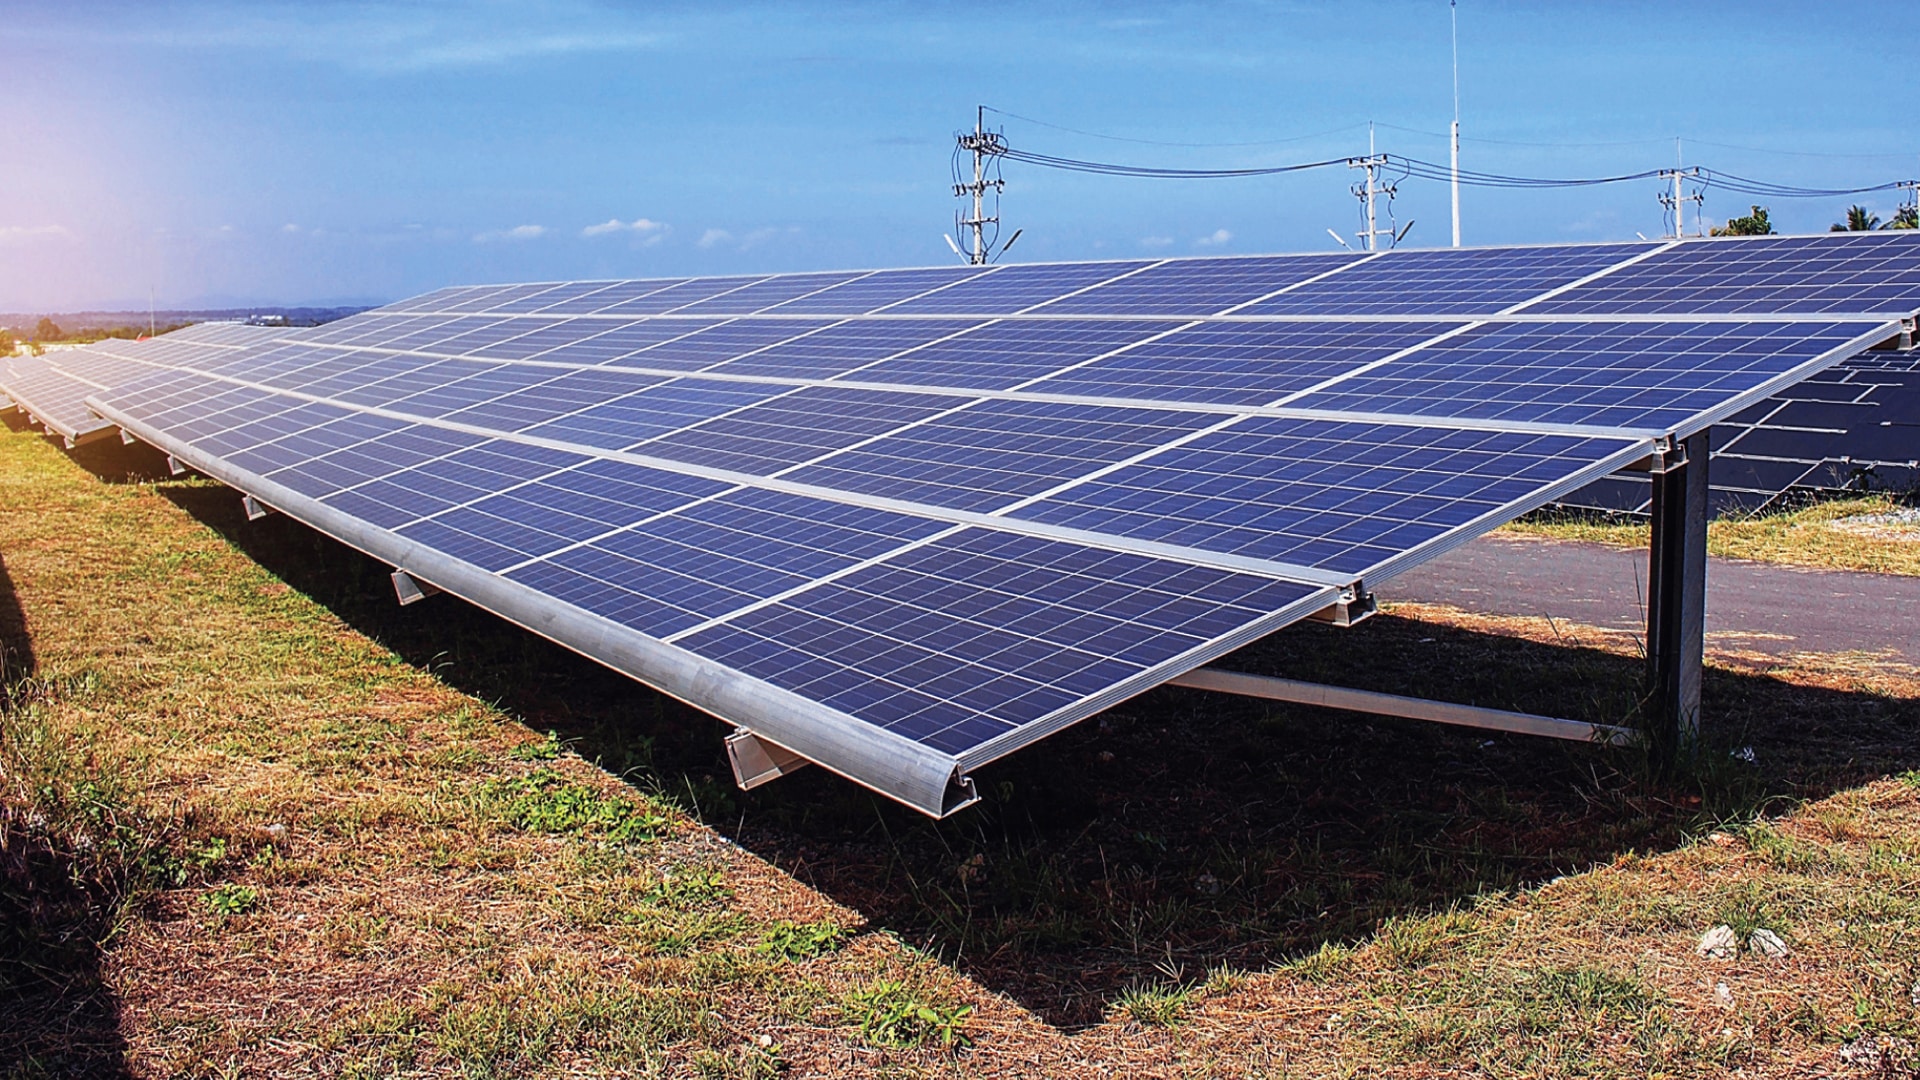 Airtel commissions 21-MW solar power unit in Maharashtra